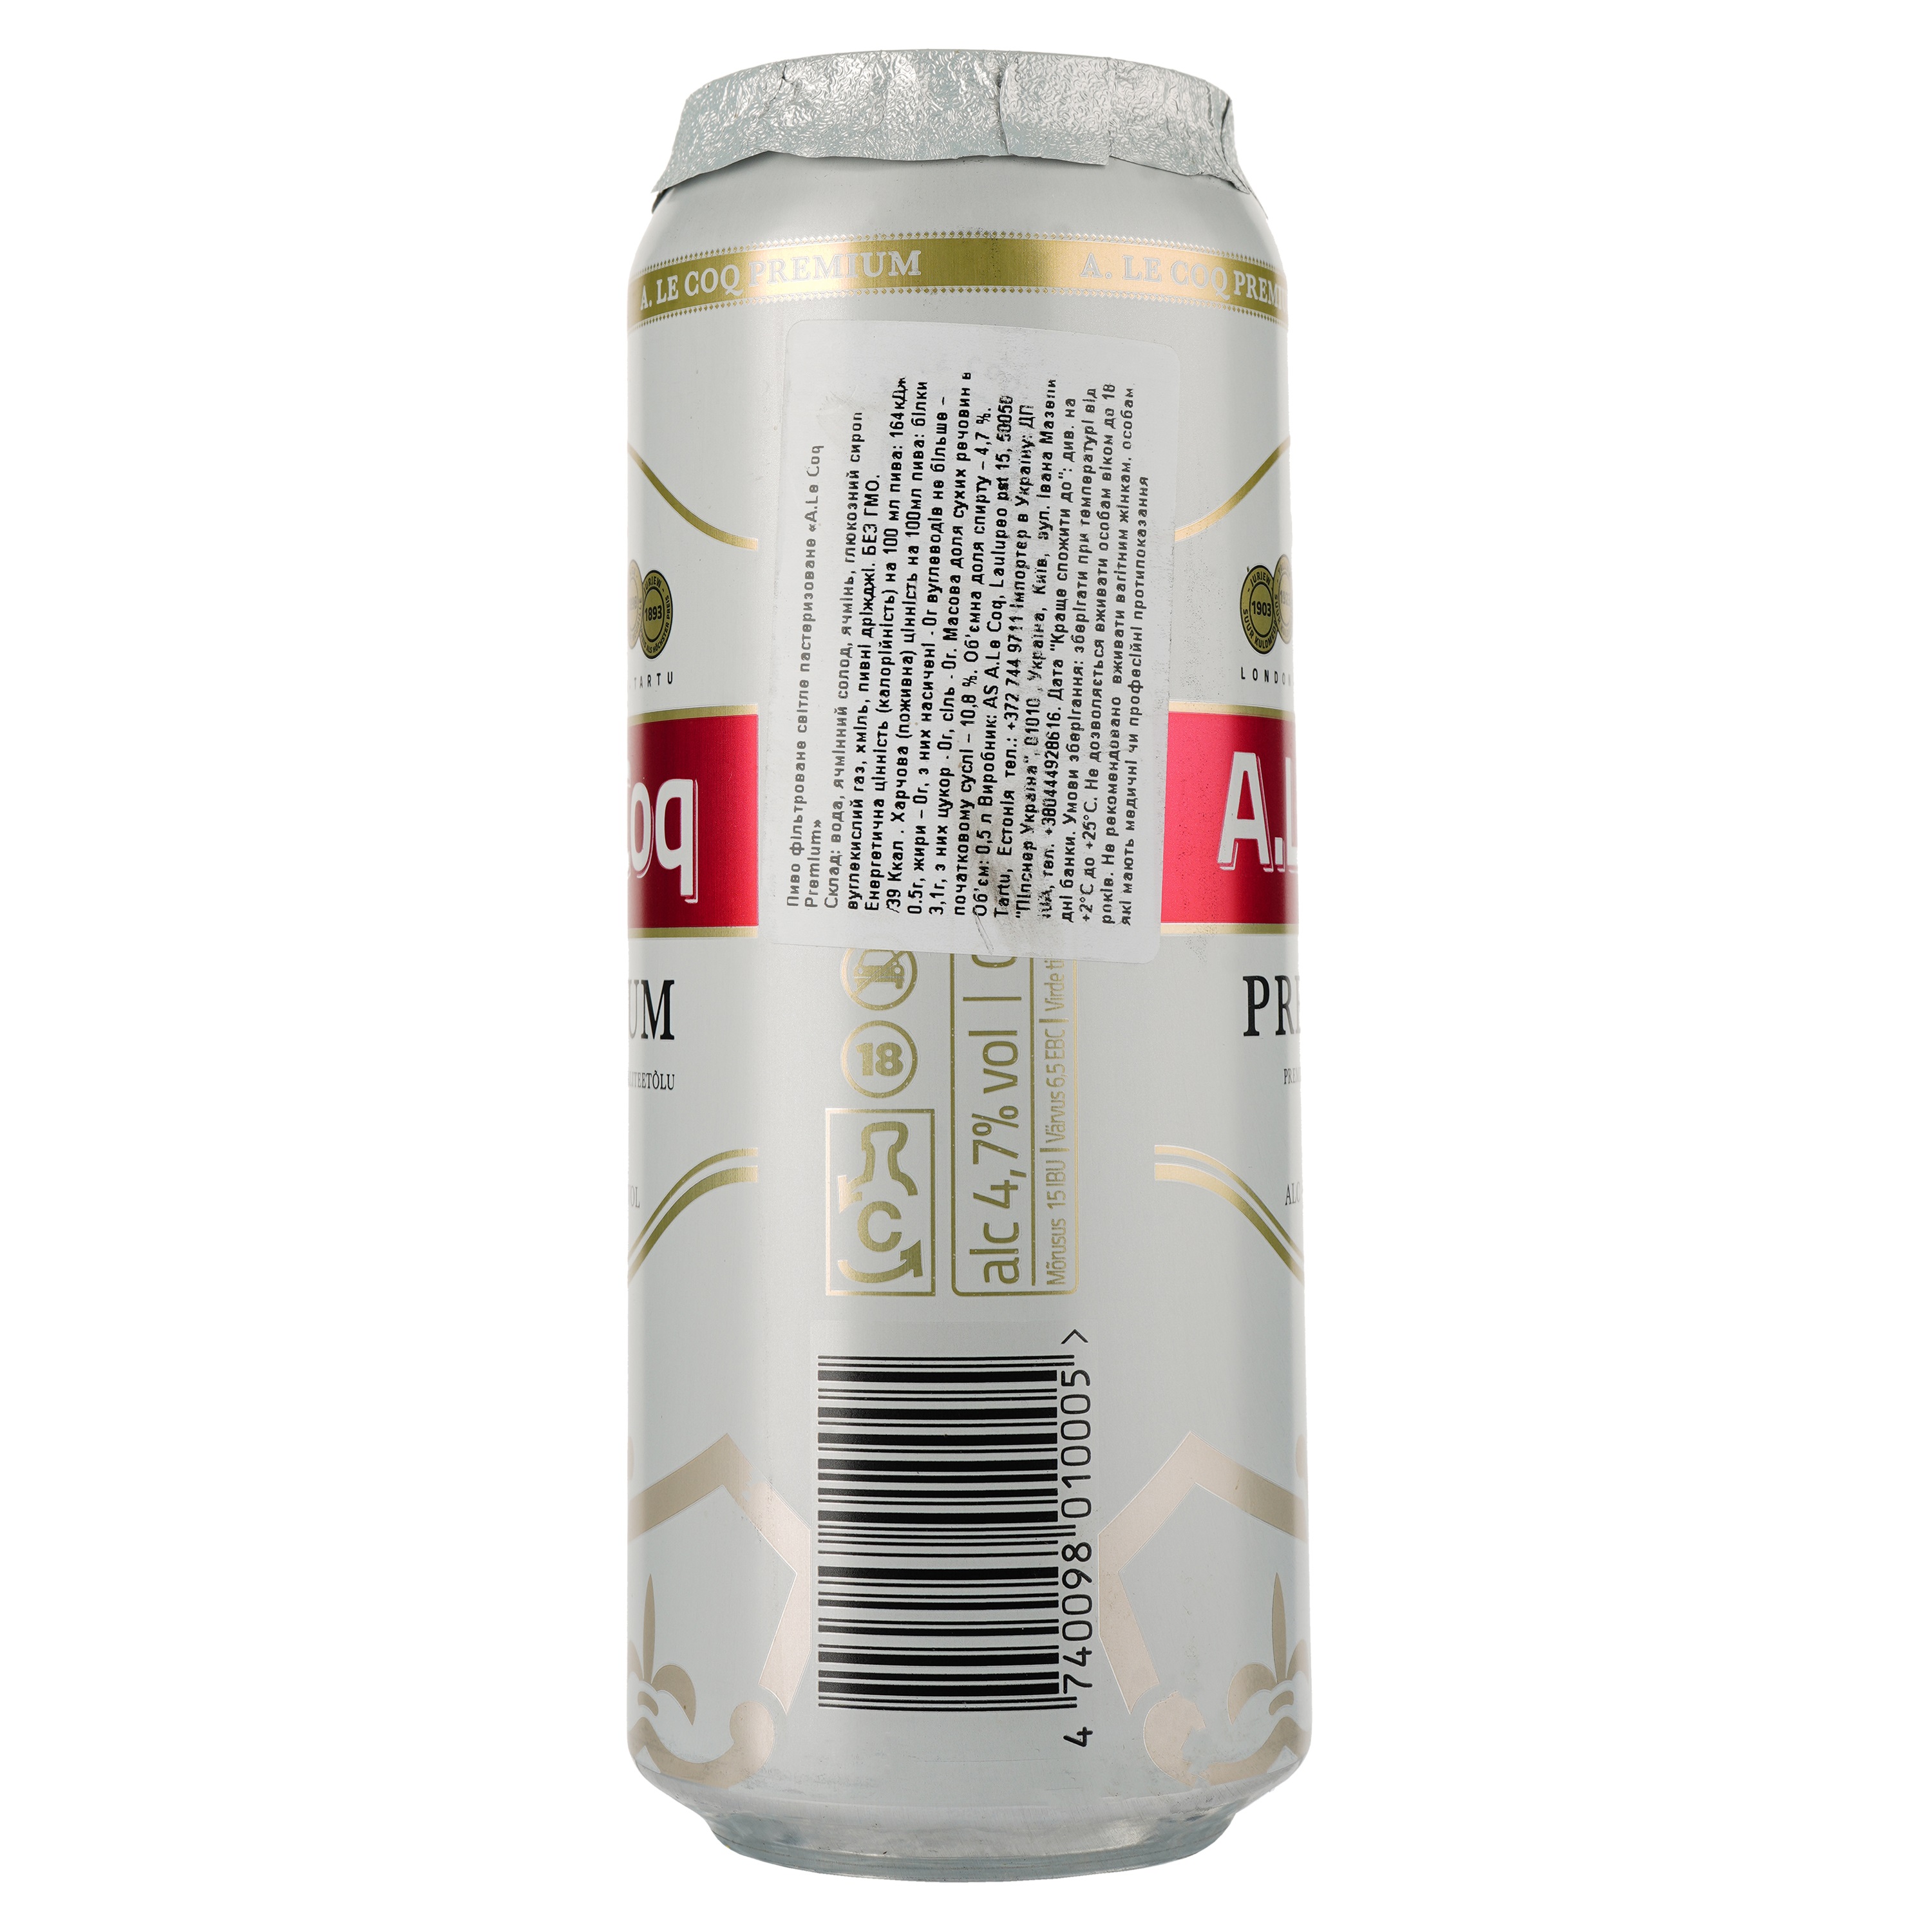 Пиво A. Le Coq Premium, светлое, фильтрованное, 4,7%, ж/б, 0,5 л - фото 3